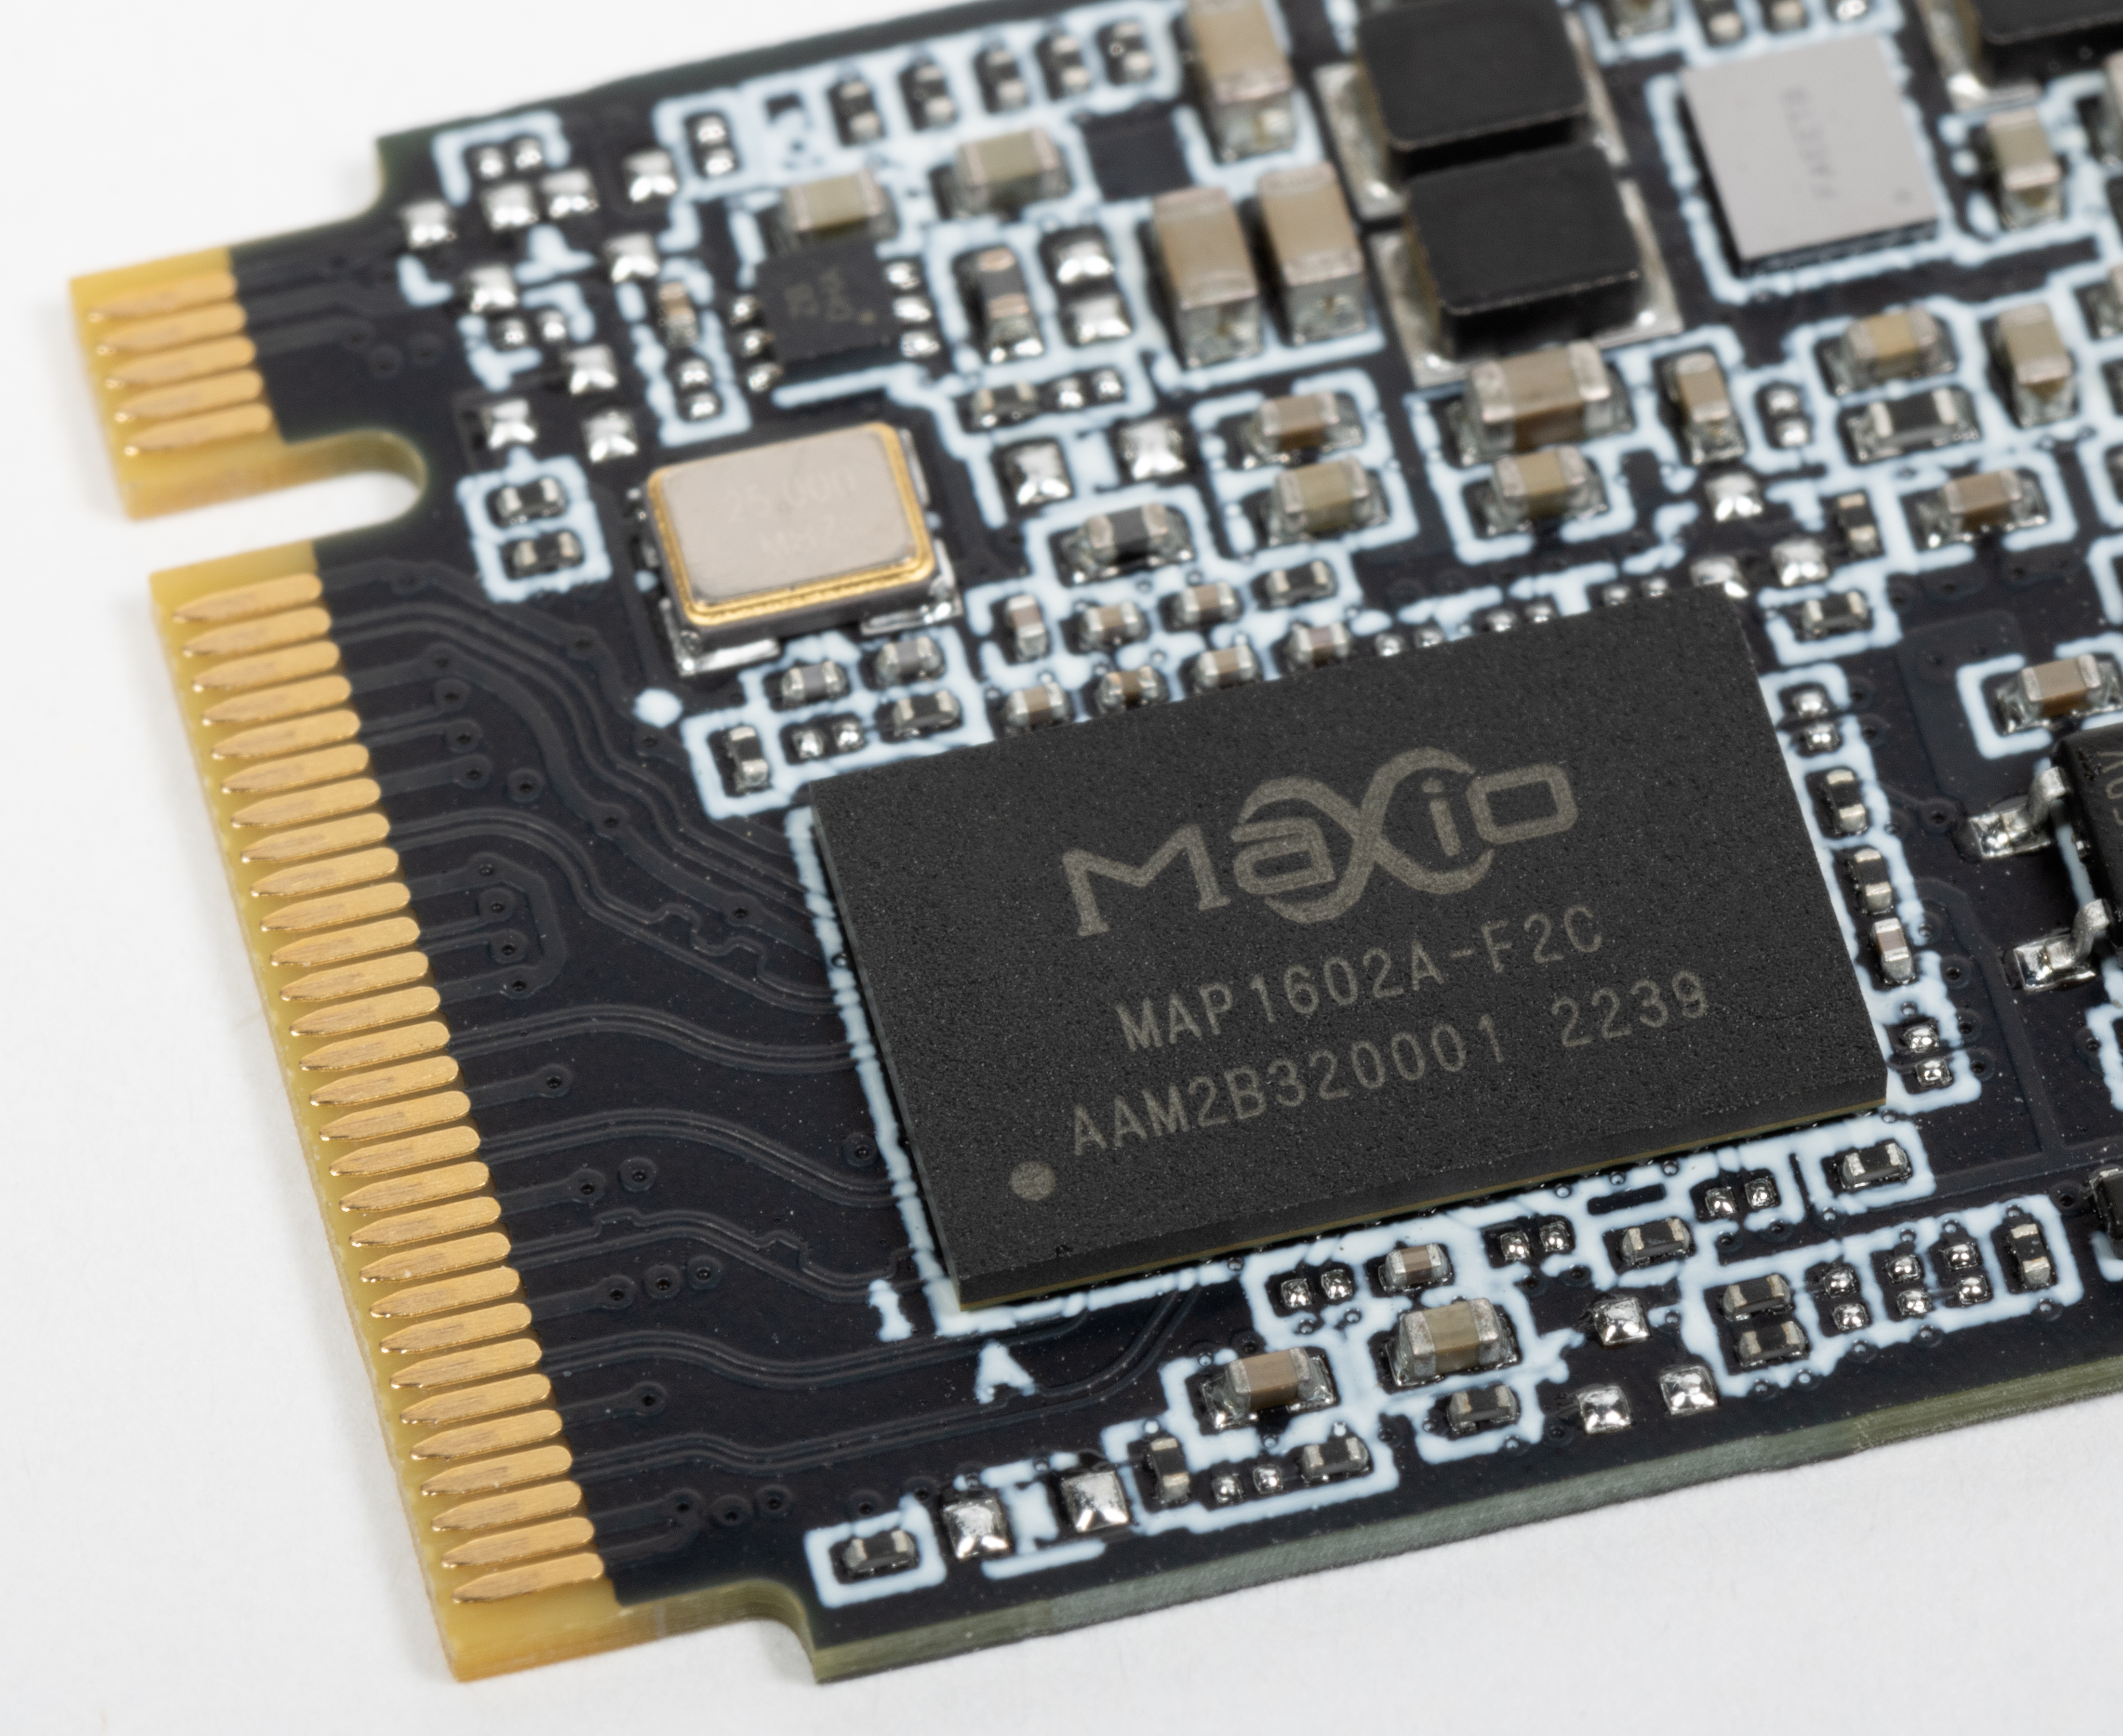 Pci support. Интерфейс SSD PCIE. Maxio map1602 BGA. Lexar nm620 PCIE gen3x4 1 ТБ. PCIE Gen 2 на 1 терабайт.